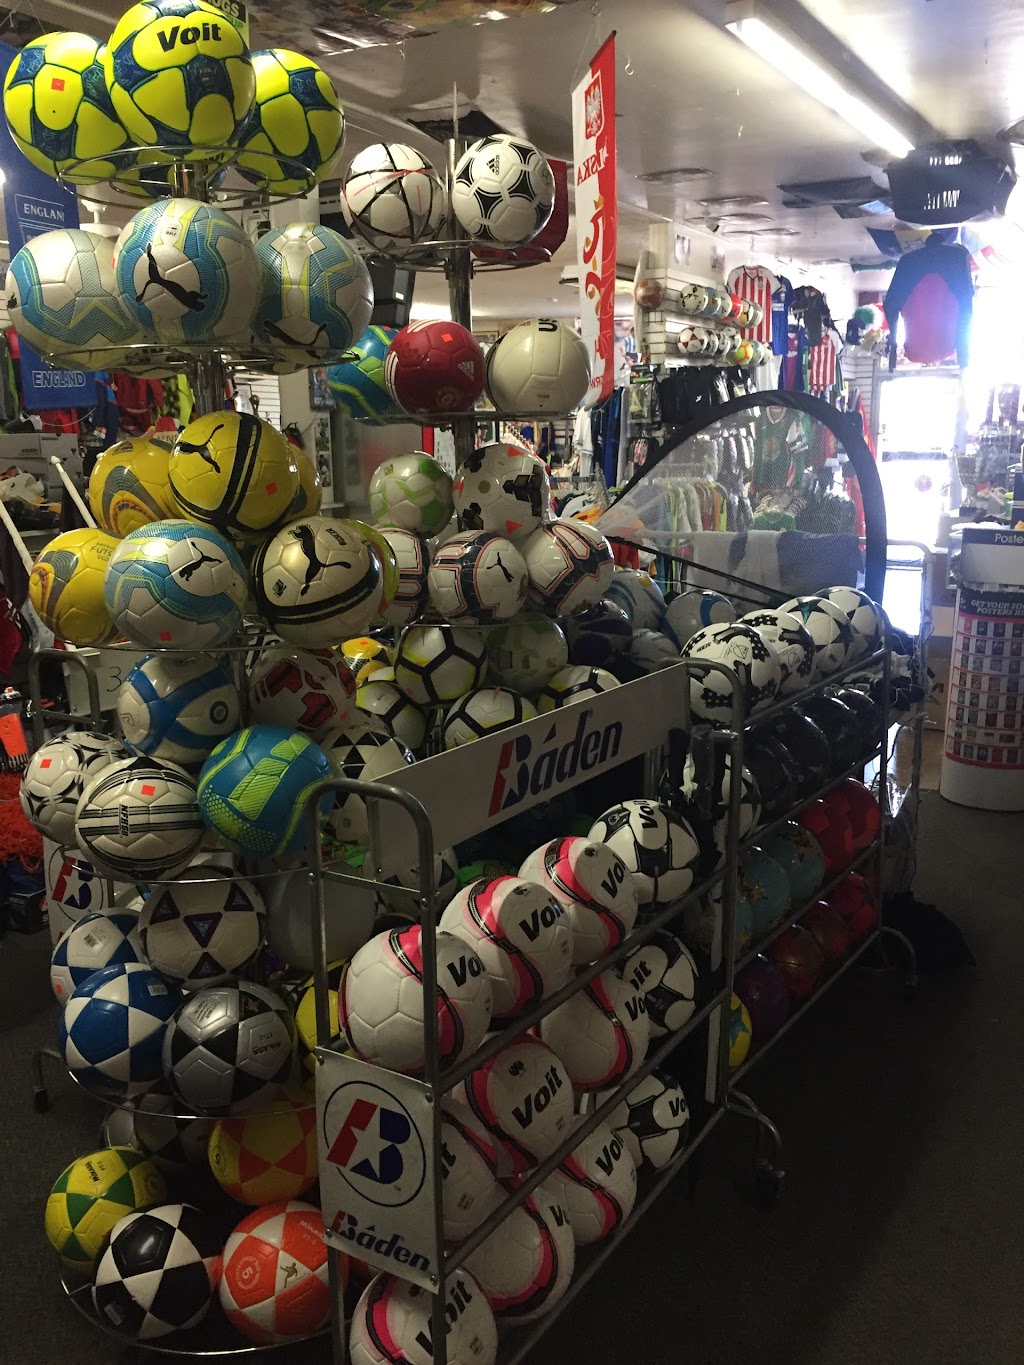 Deportes America Soccer Shop | 2822 N 16th St, Phoenix, AZ 85006 | Phone: (602) 241-1980